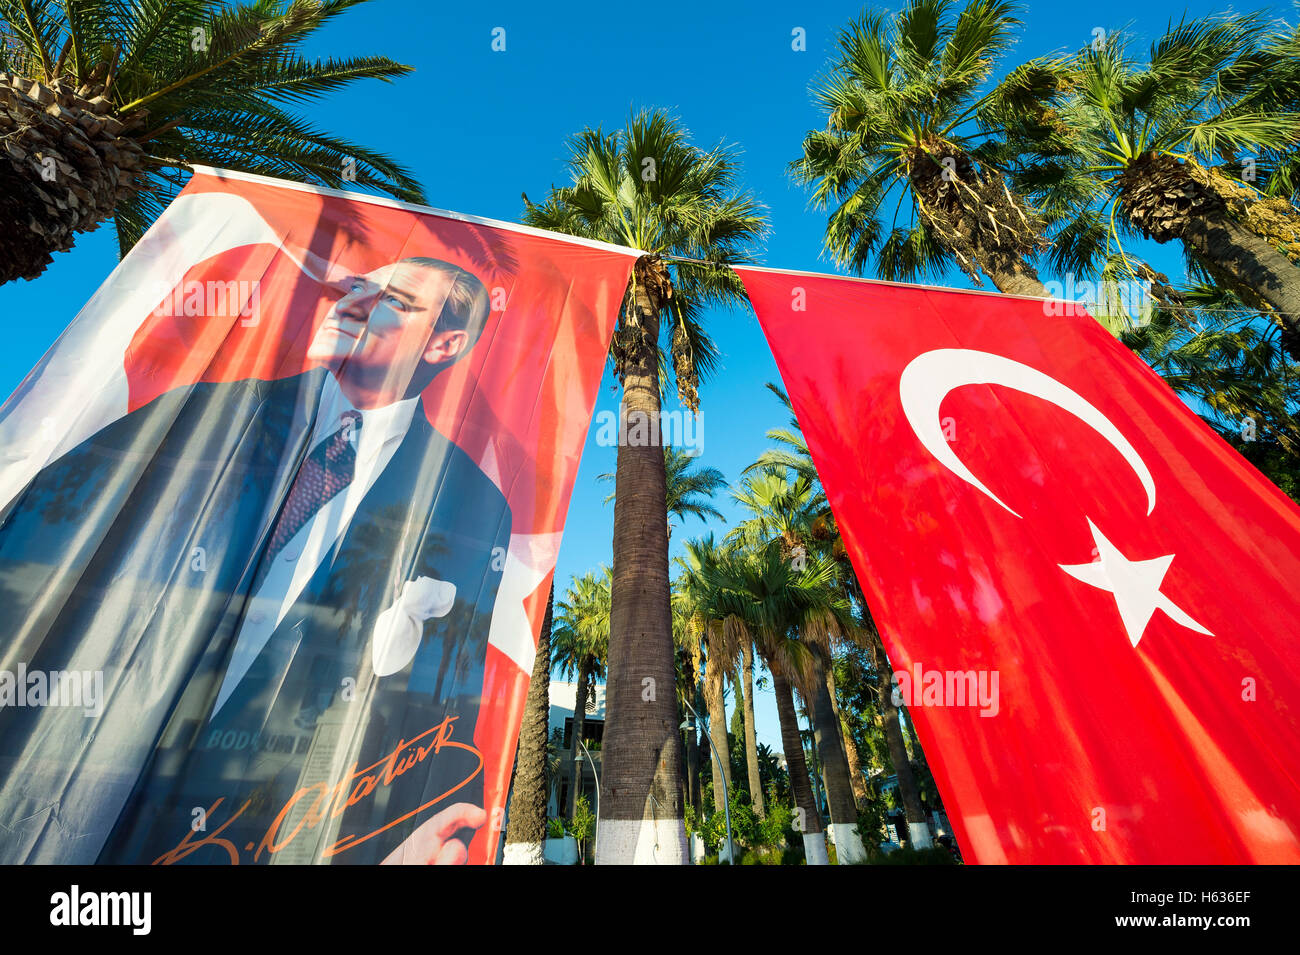 BODRUM, TURKEY - OCTOBER 6, 2016: Turkish flag hanging next to portrait of Mustafa Kemal Atatürk, the founder of the Republic. Stock Photo